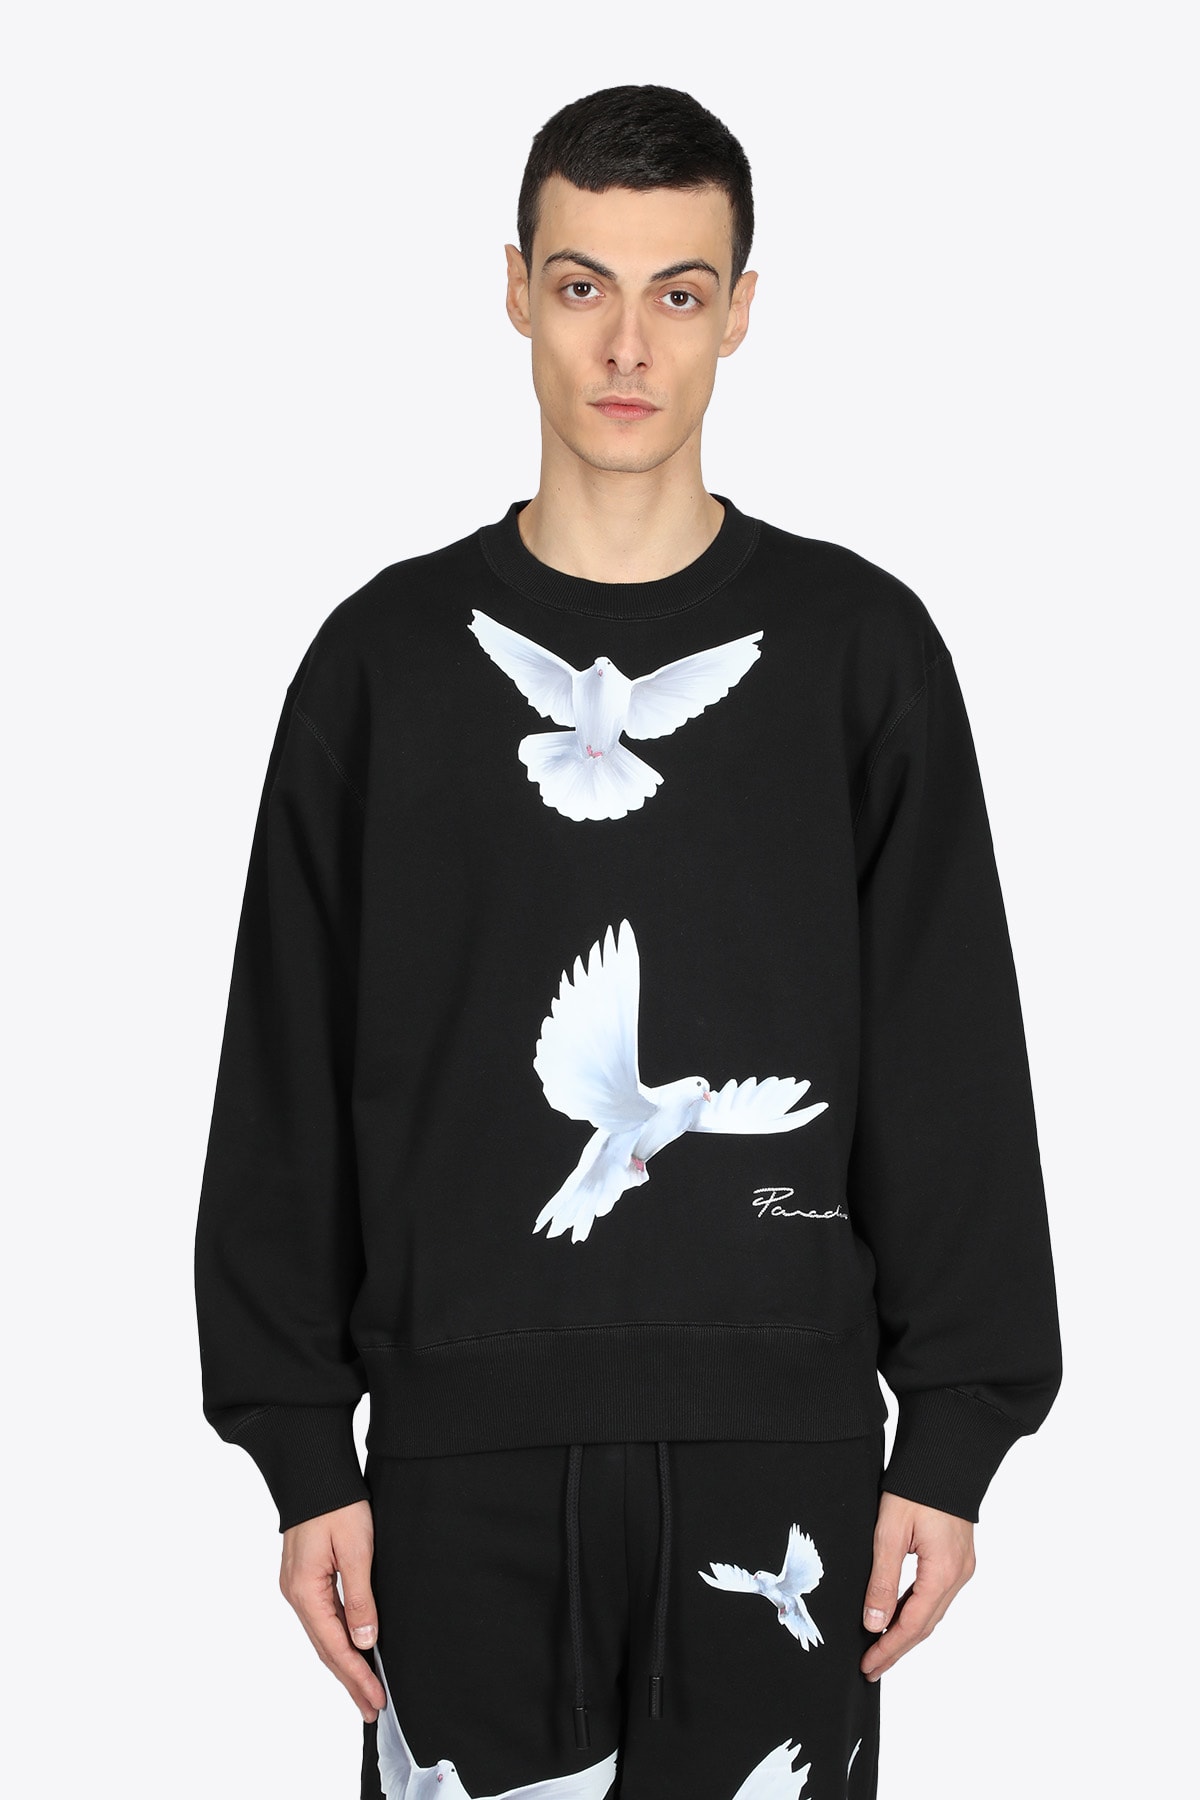 3.Paradis Flying Birds Crewneck Sweater Black cotton sweatshirt with flying birds print